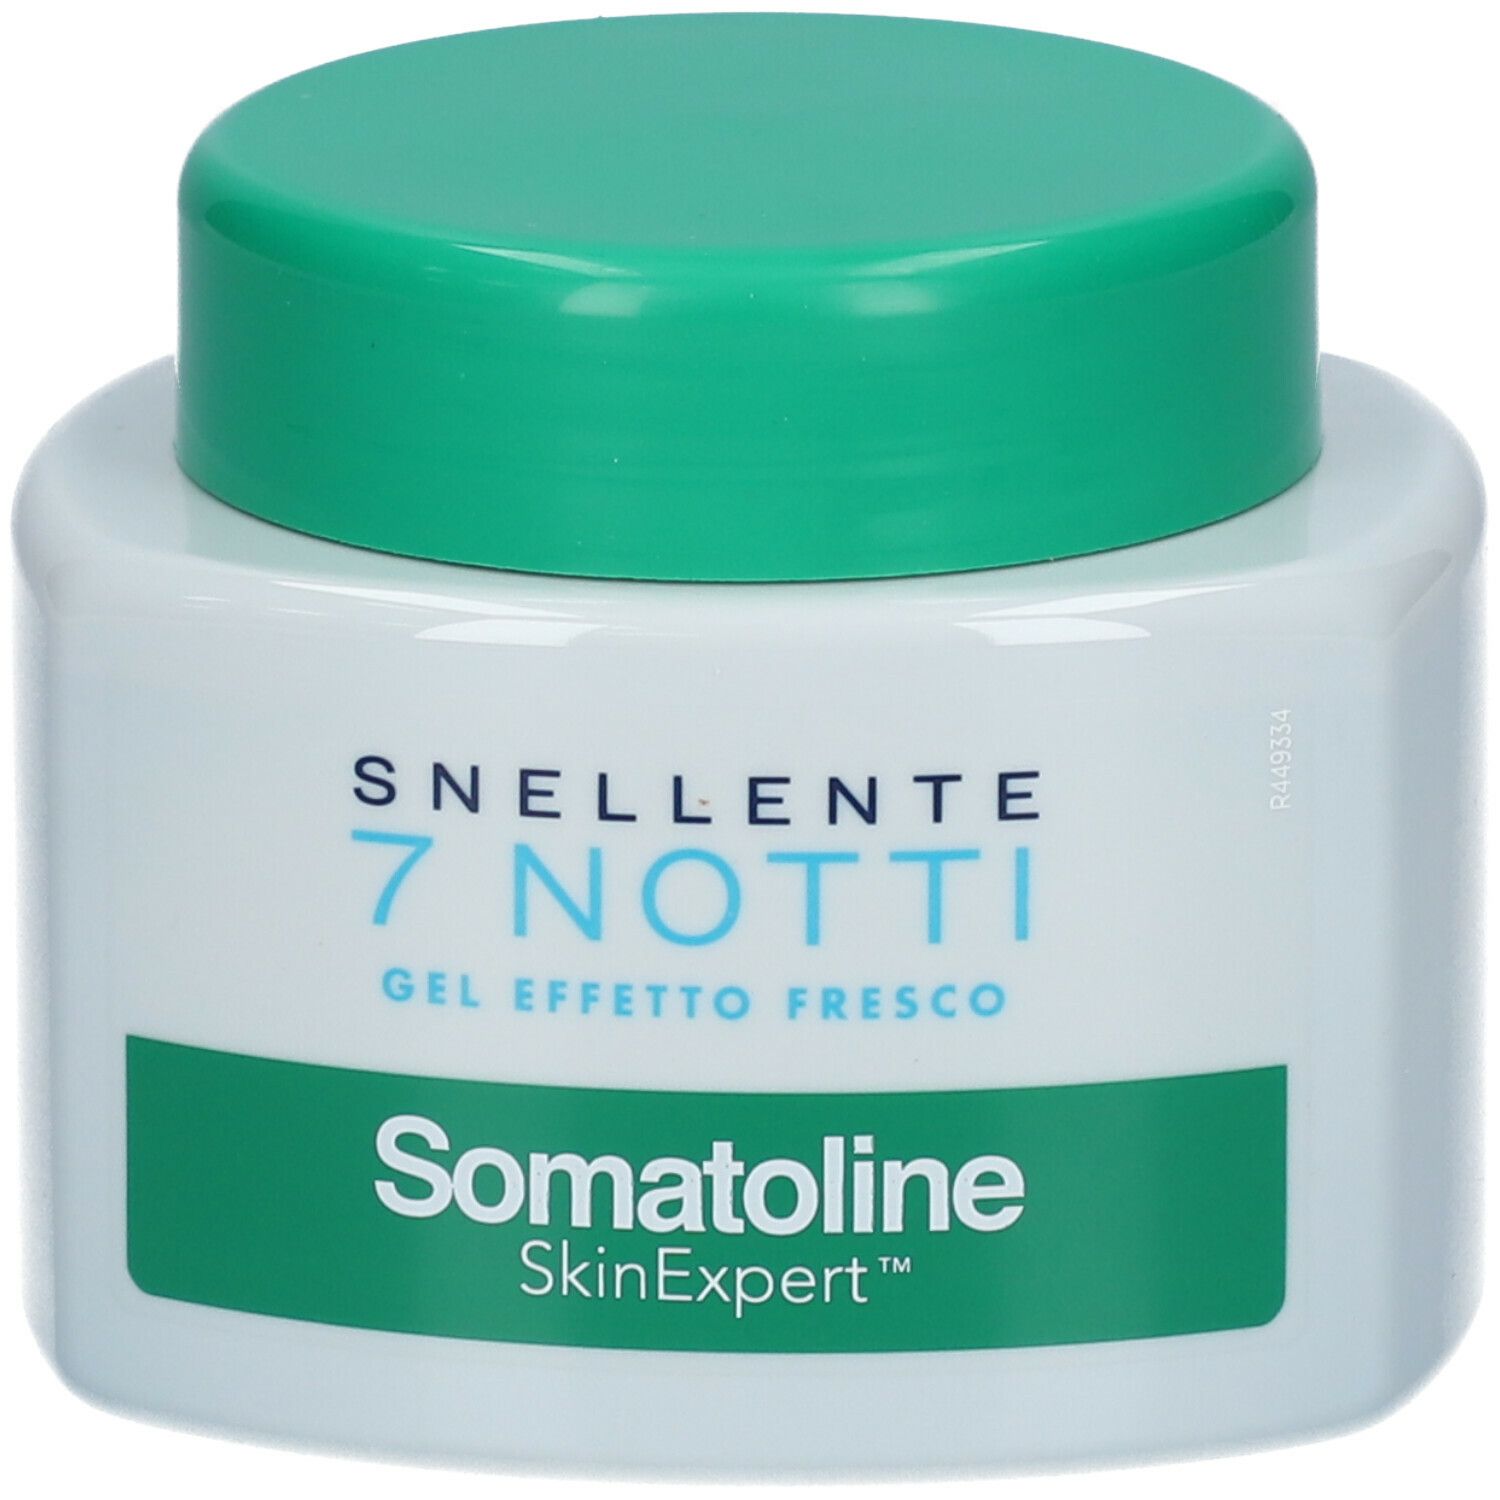 Somatoline Cosmetic® Snellente 7 Notti Gel Effetto Fresco